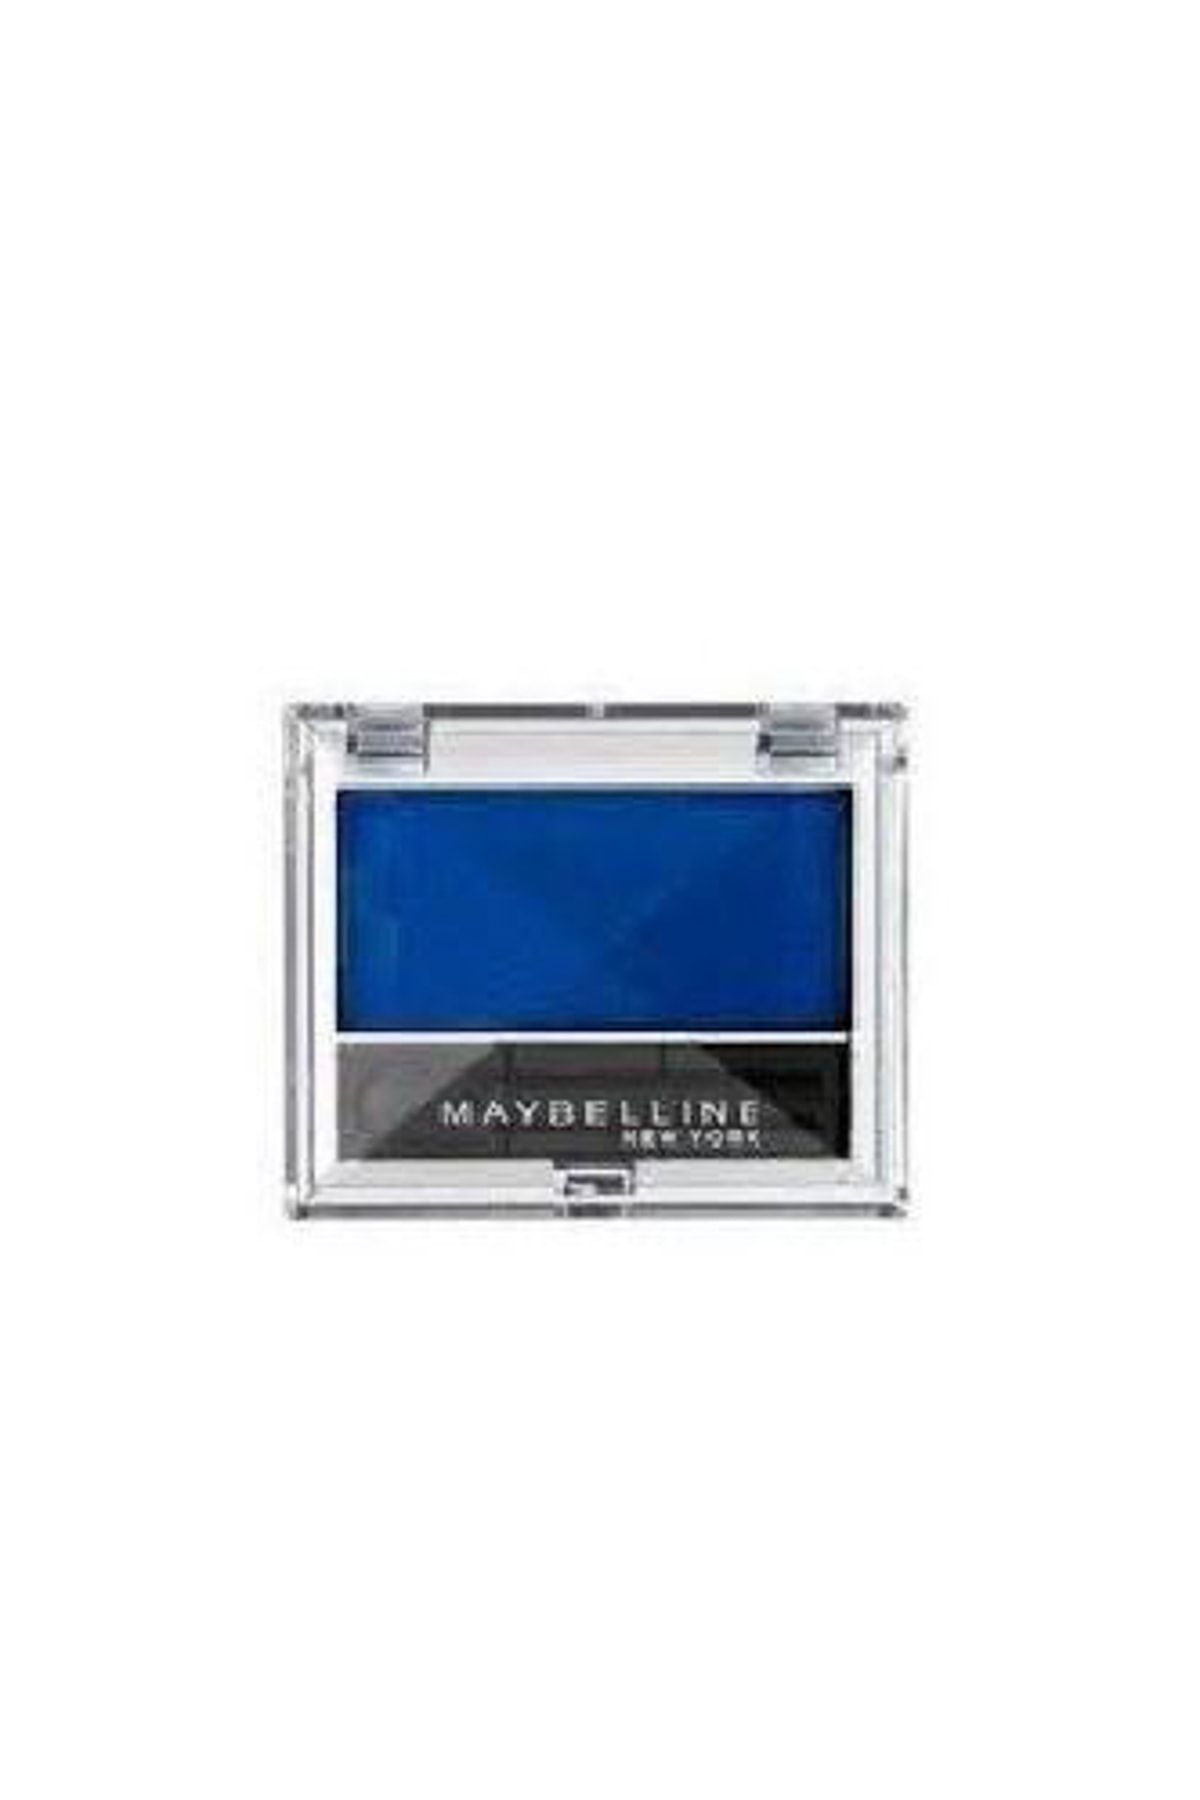 Maybelline New York Göz Farı - Blue Couture 440 3600530654086